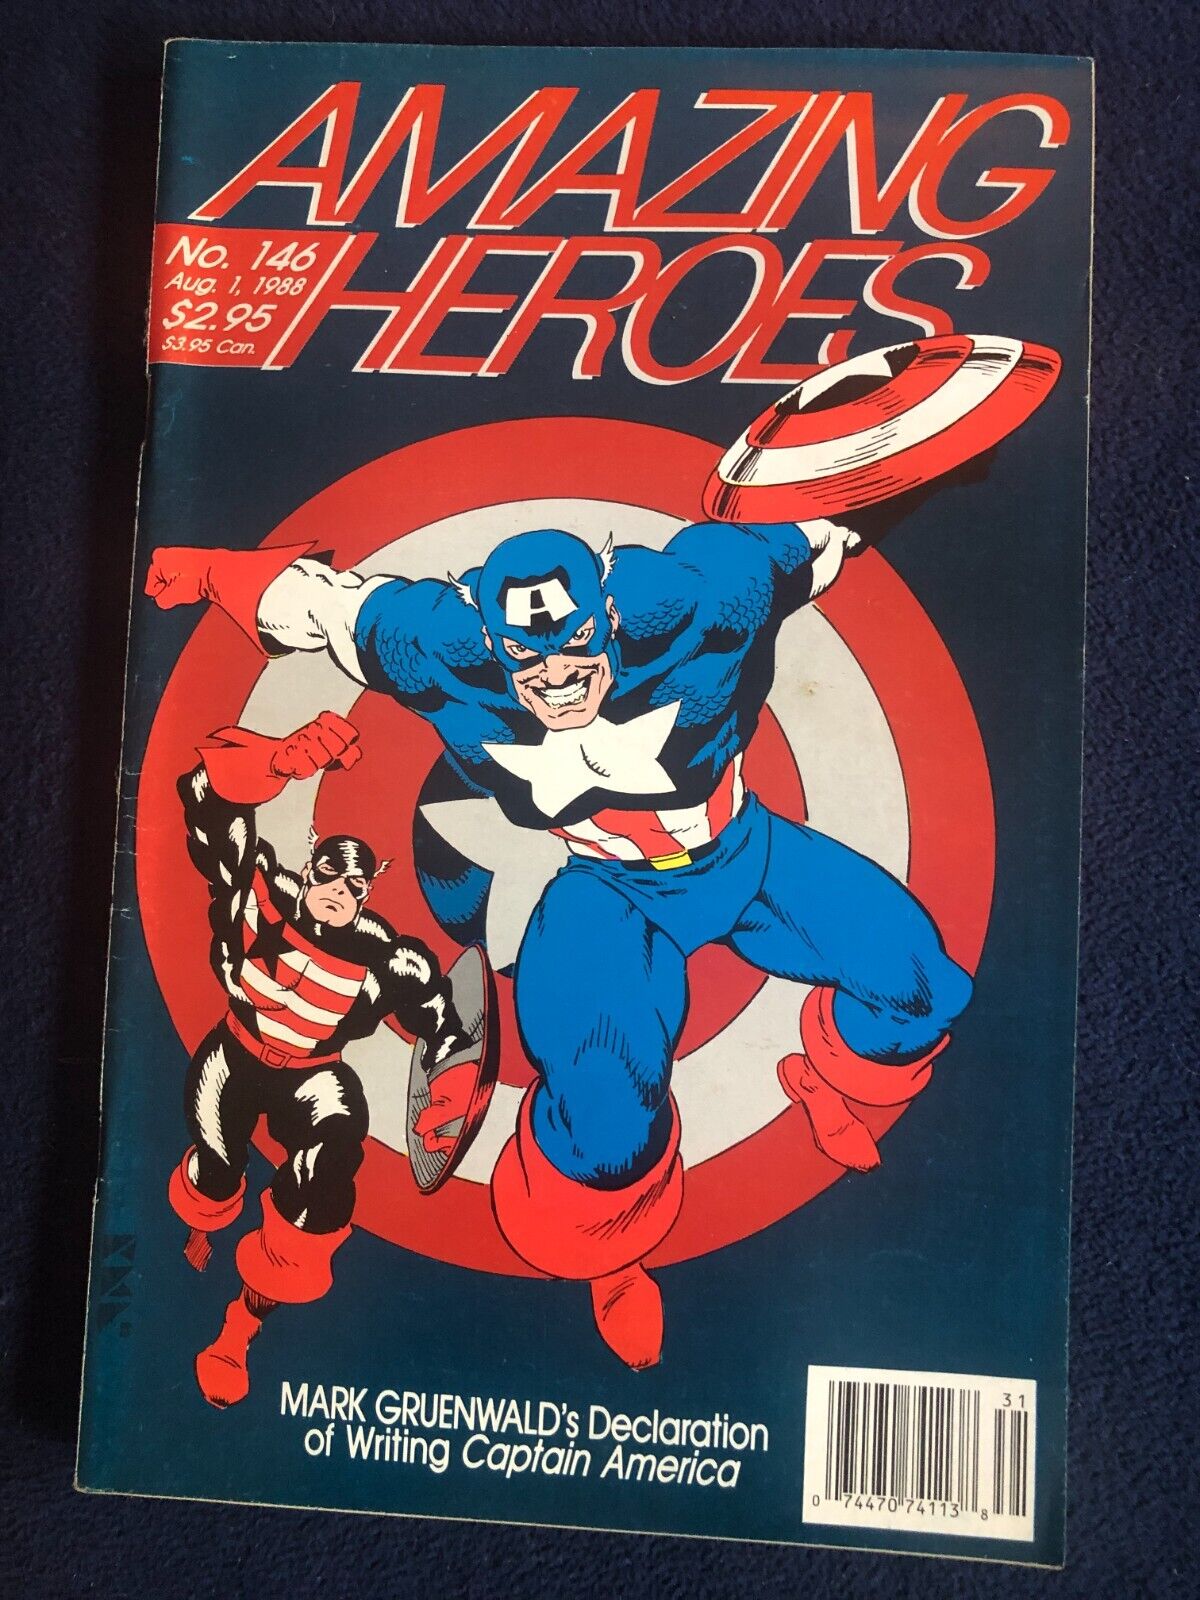 Redbeard/Fantagraphics AMAZING HEROES #146 (1988) - Captain America